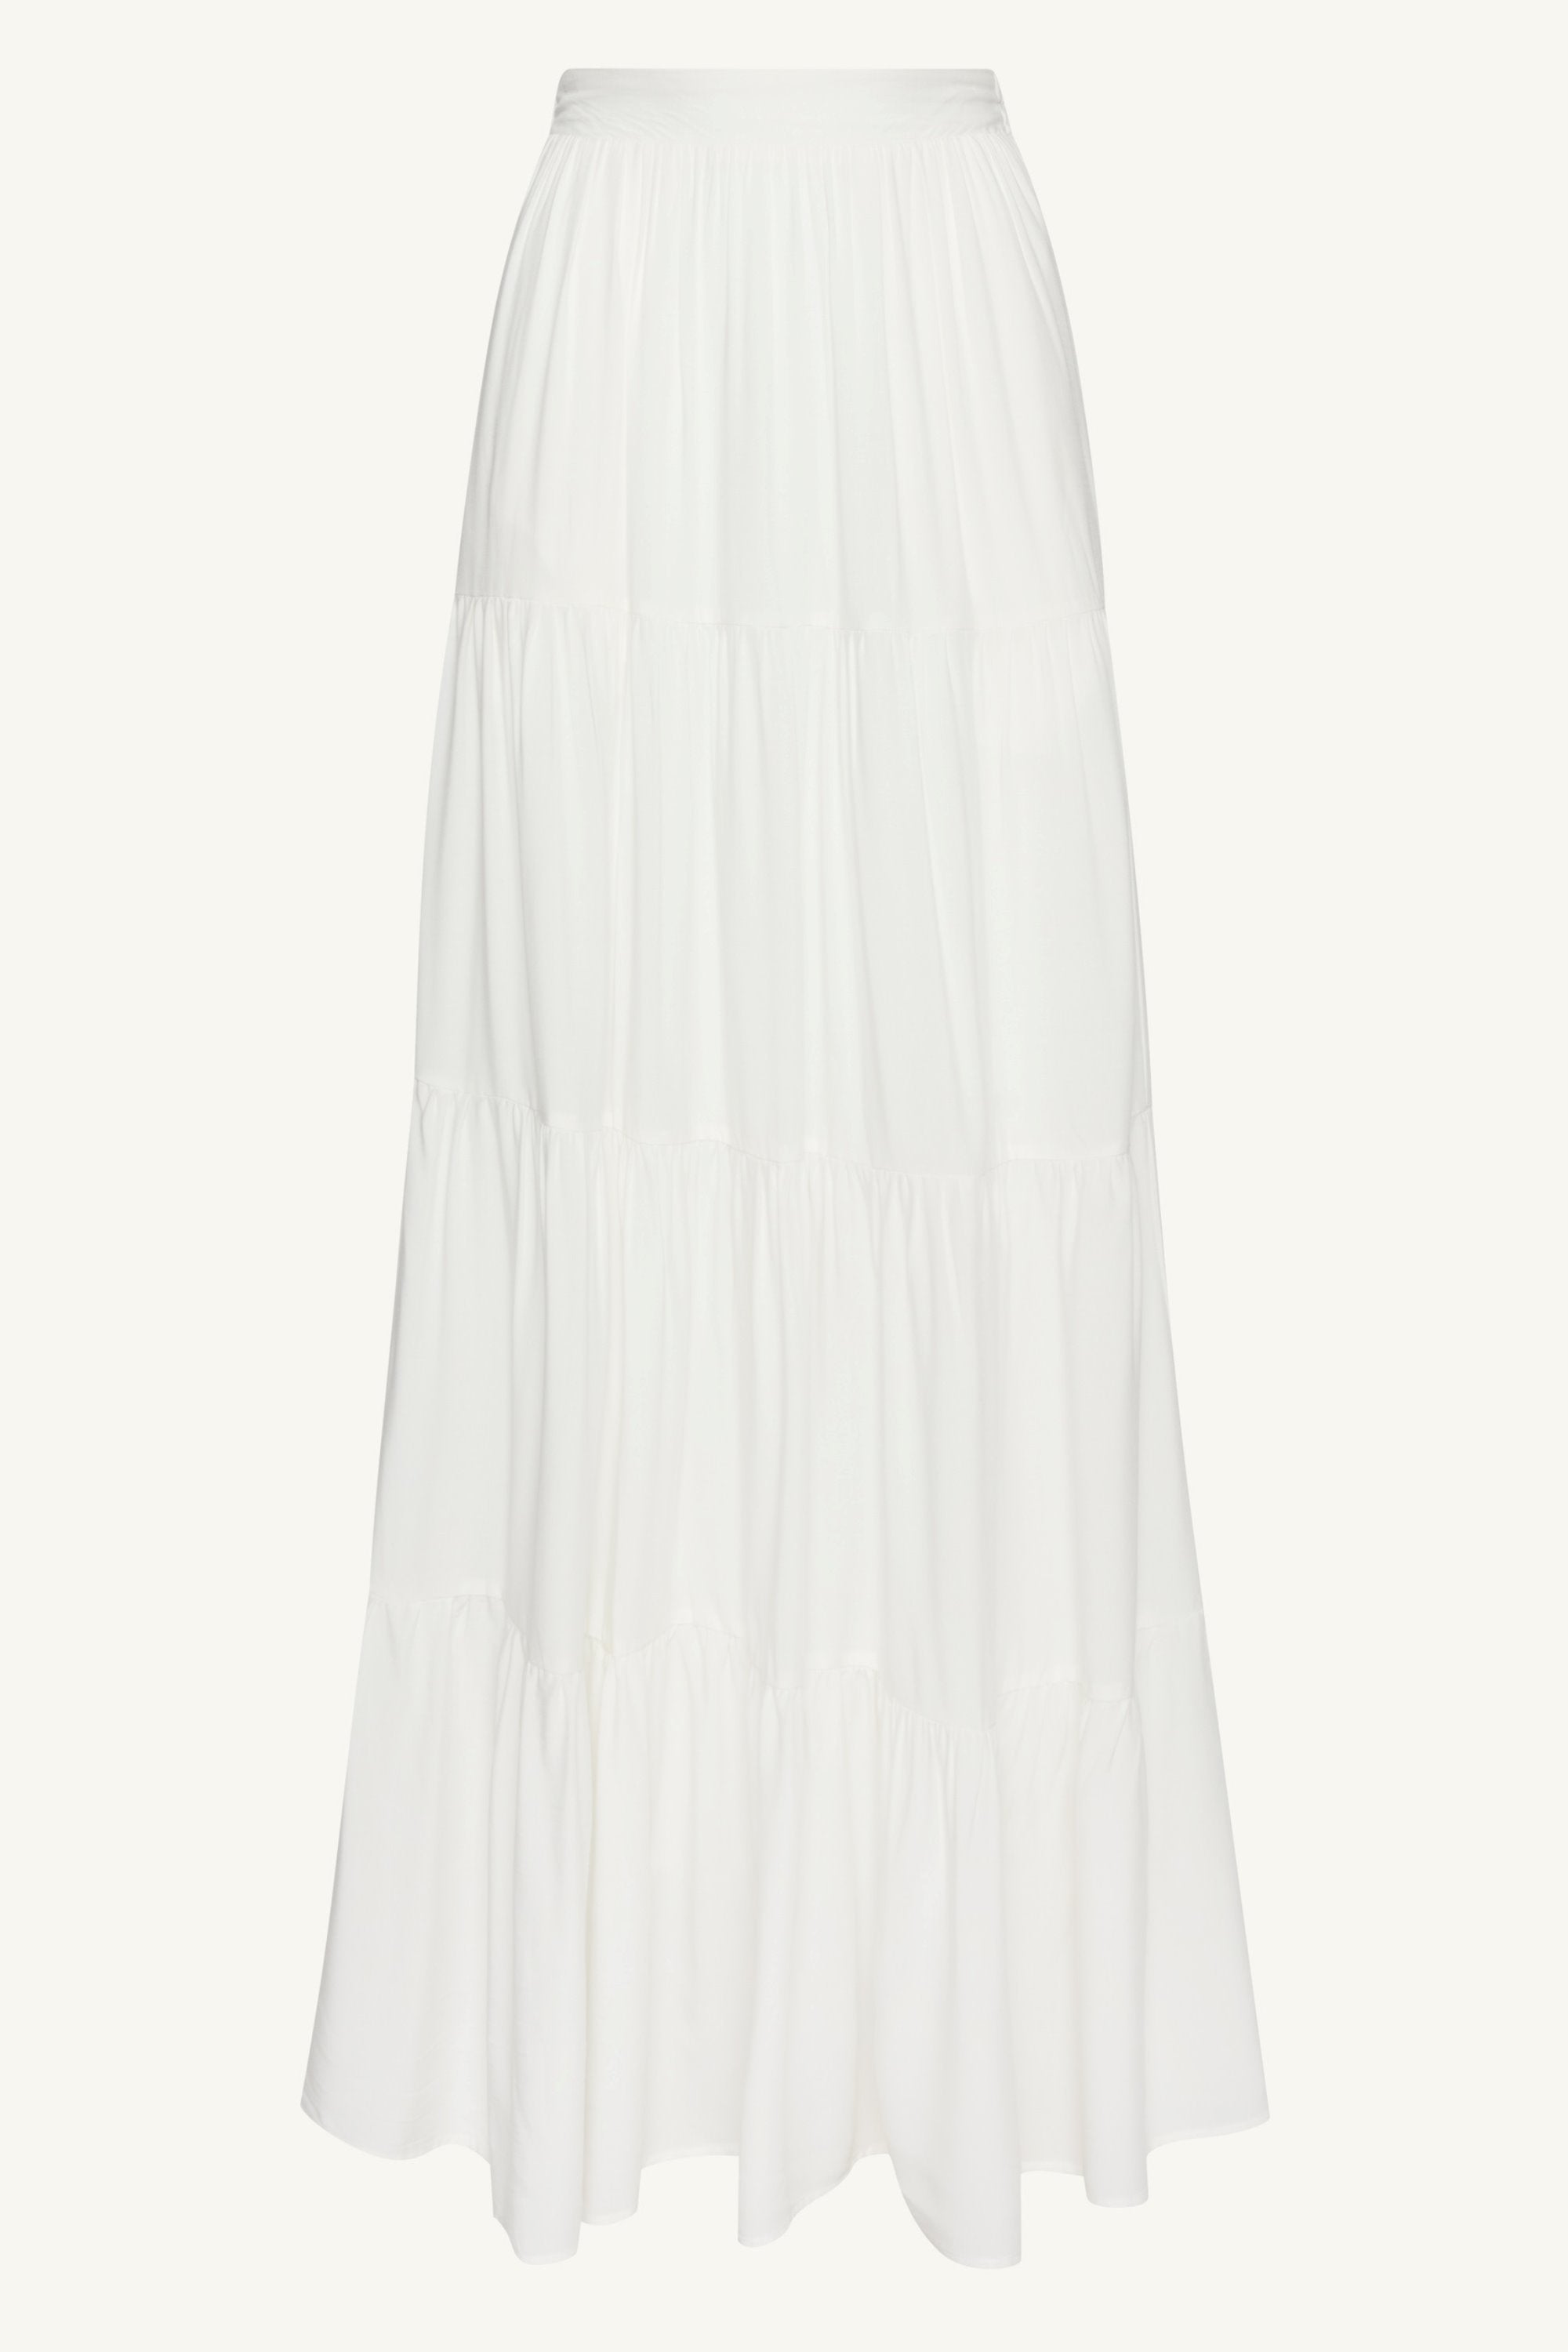 Sana Maxi Skirt - White Clothing epschoolboard 